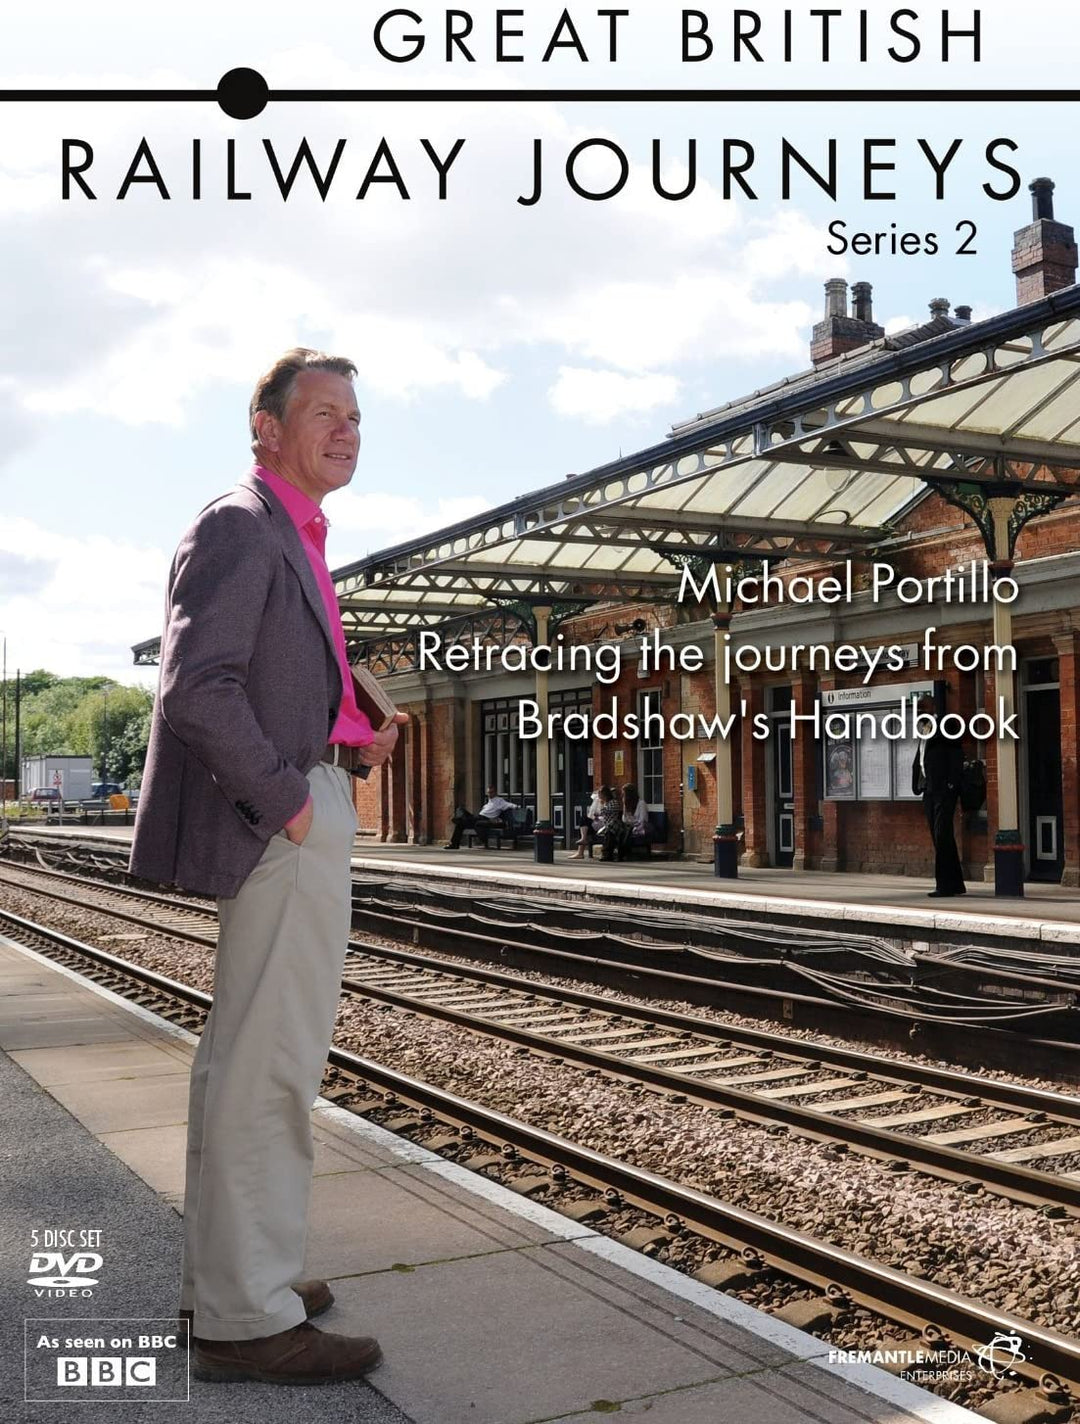 Great British Railway Journeys - Series 2 [DVD]